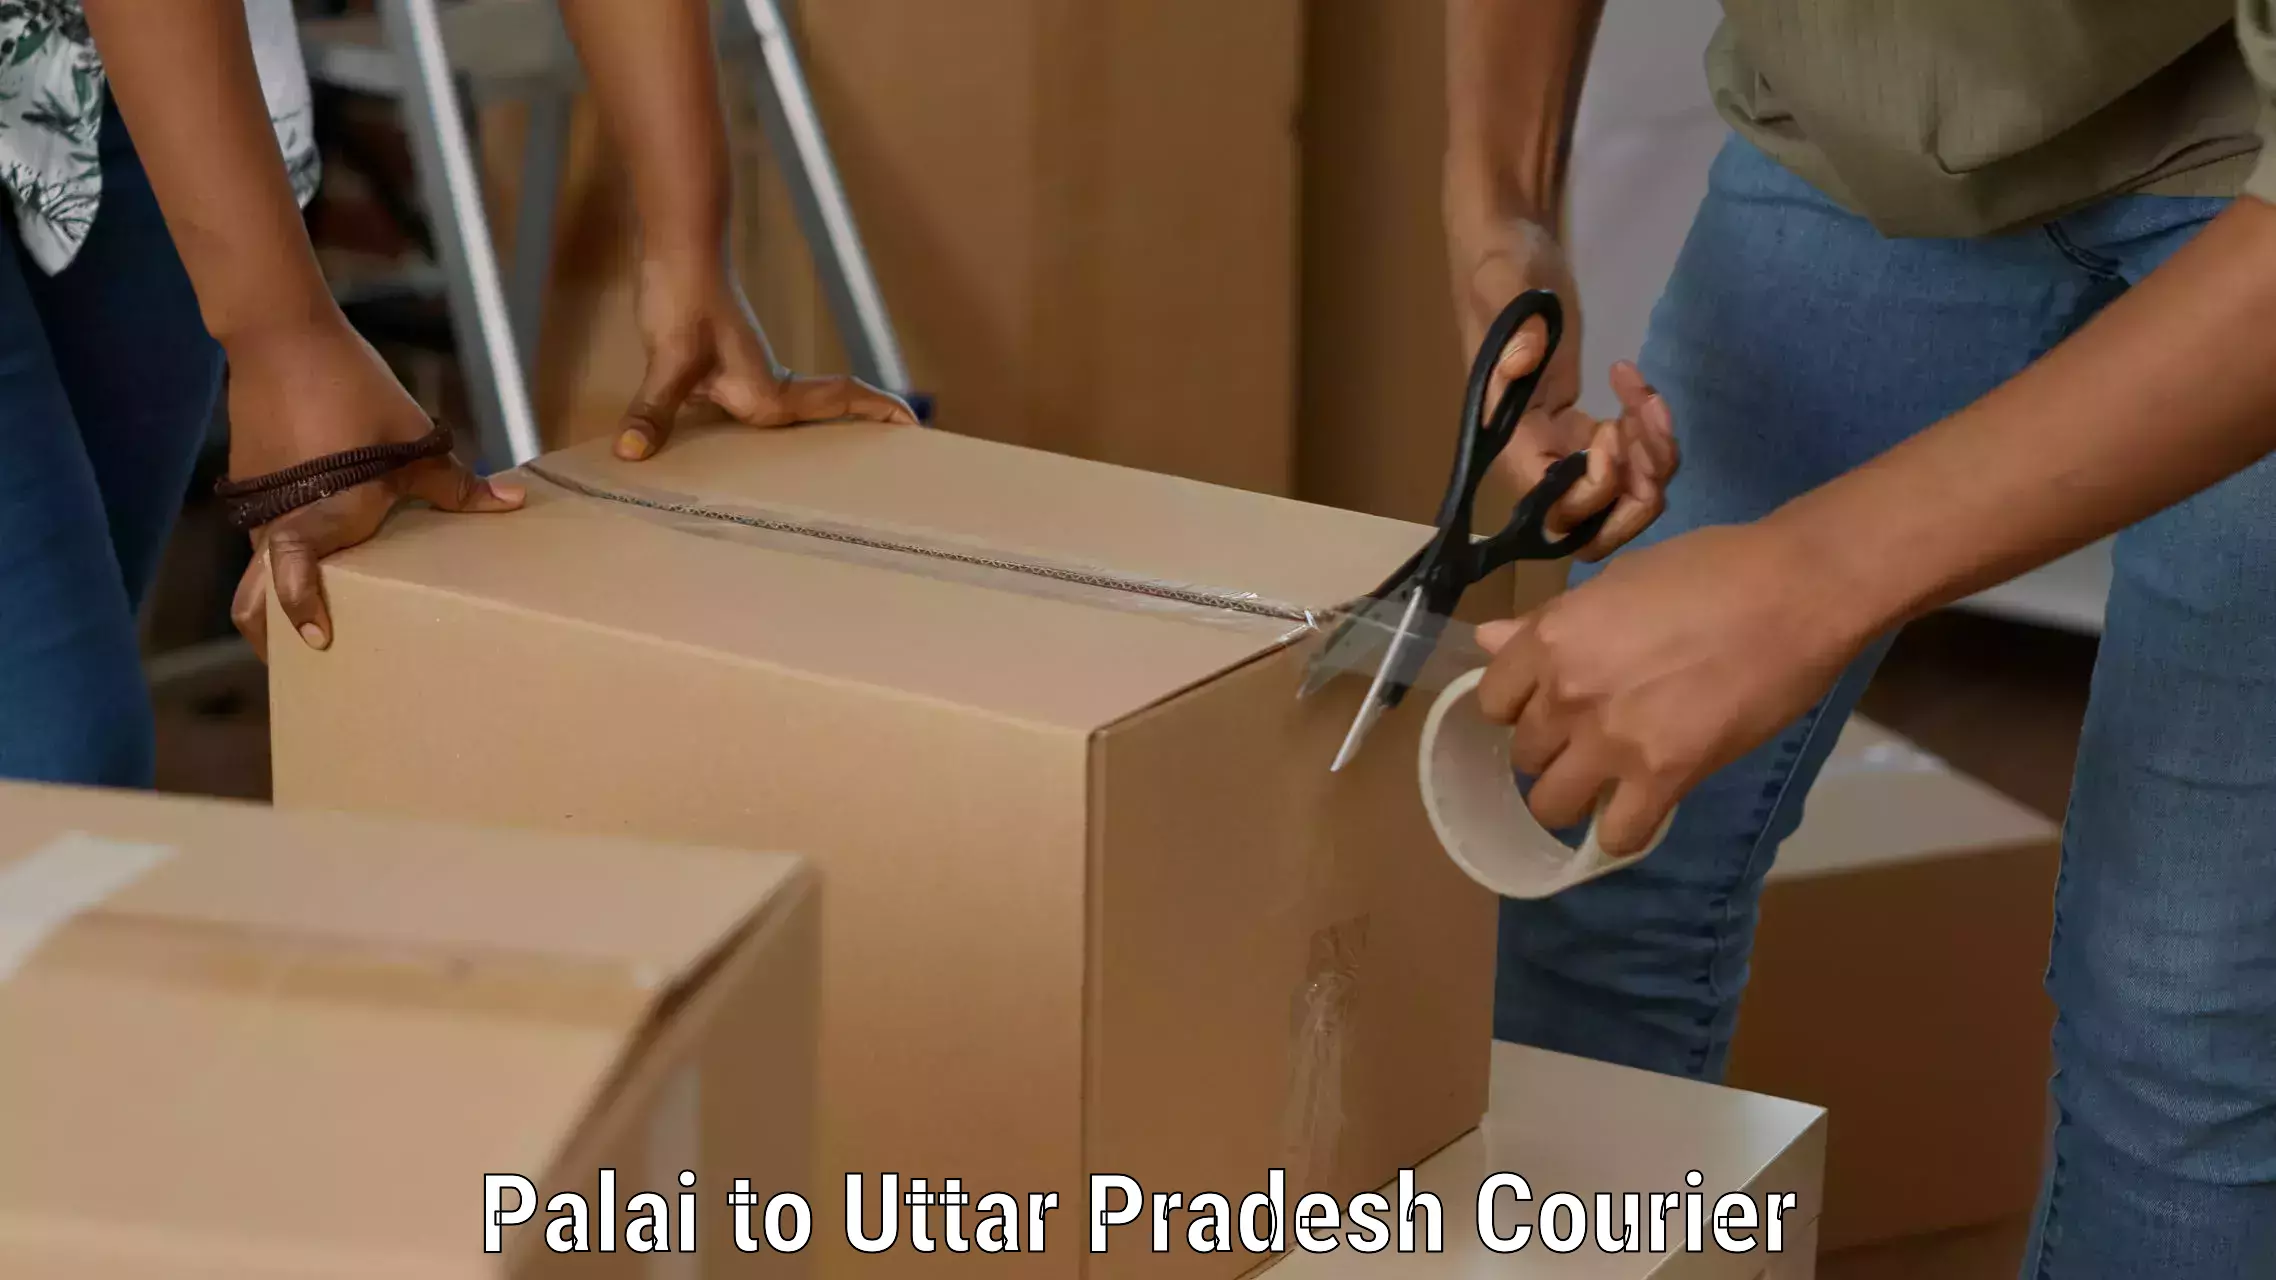 Customizable shipping options Palai to Uttar Pradesh